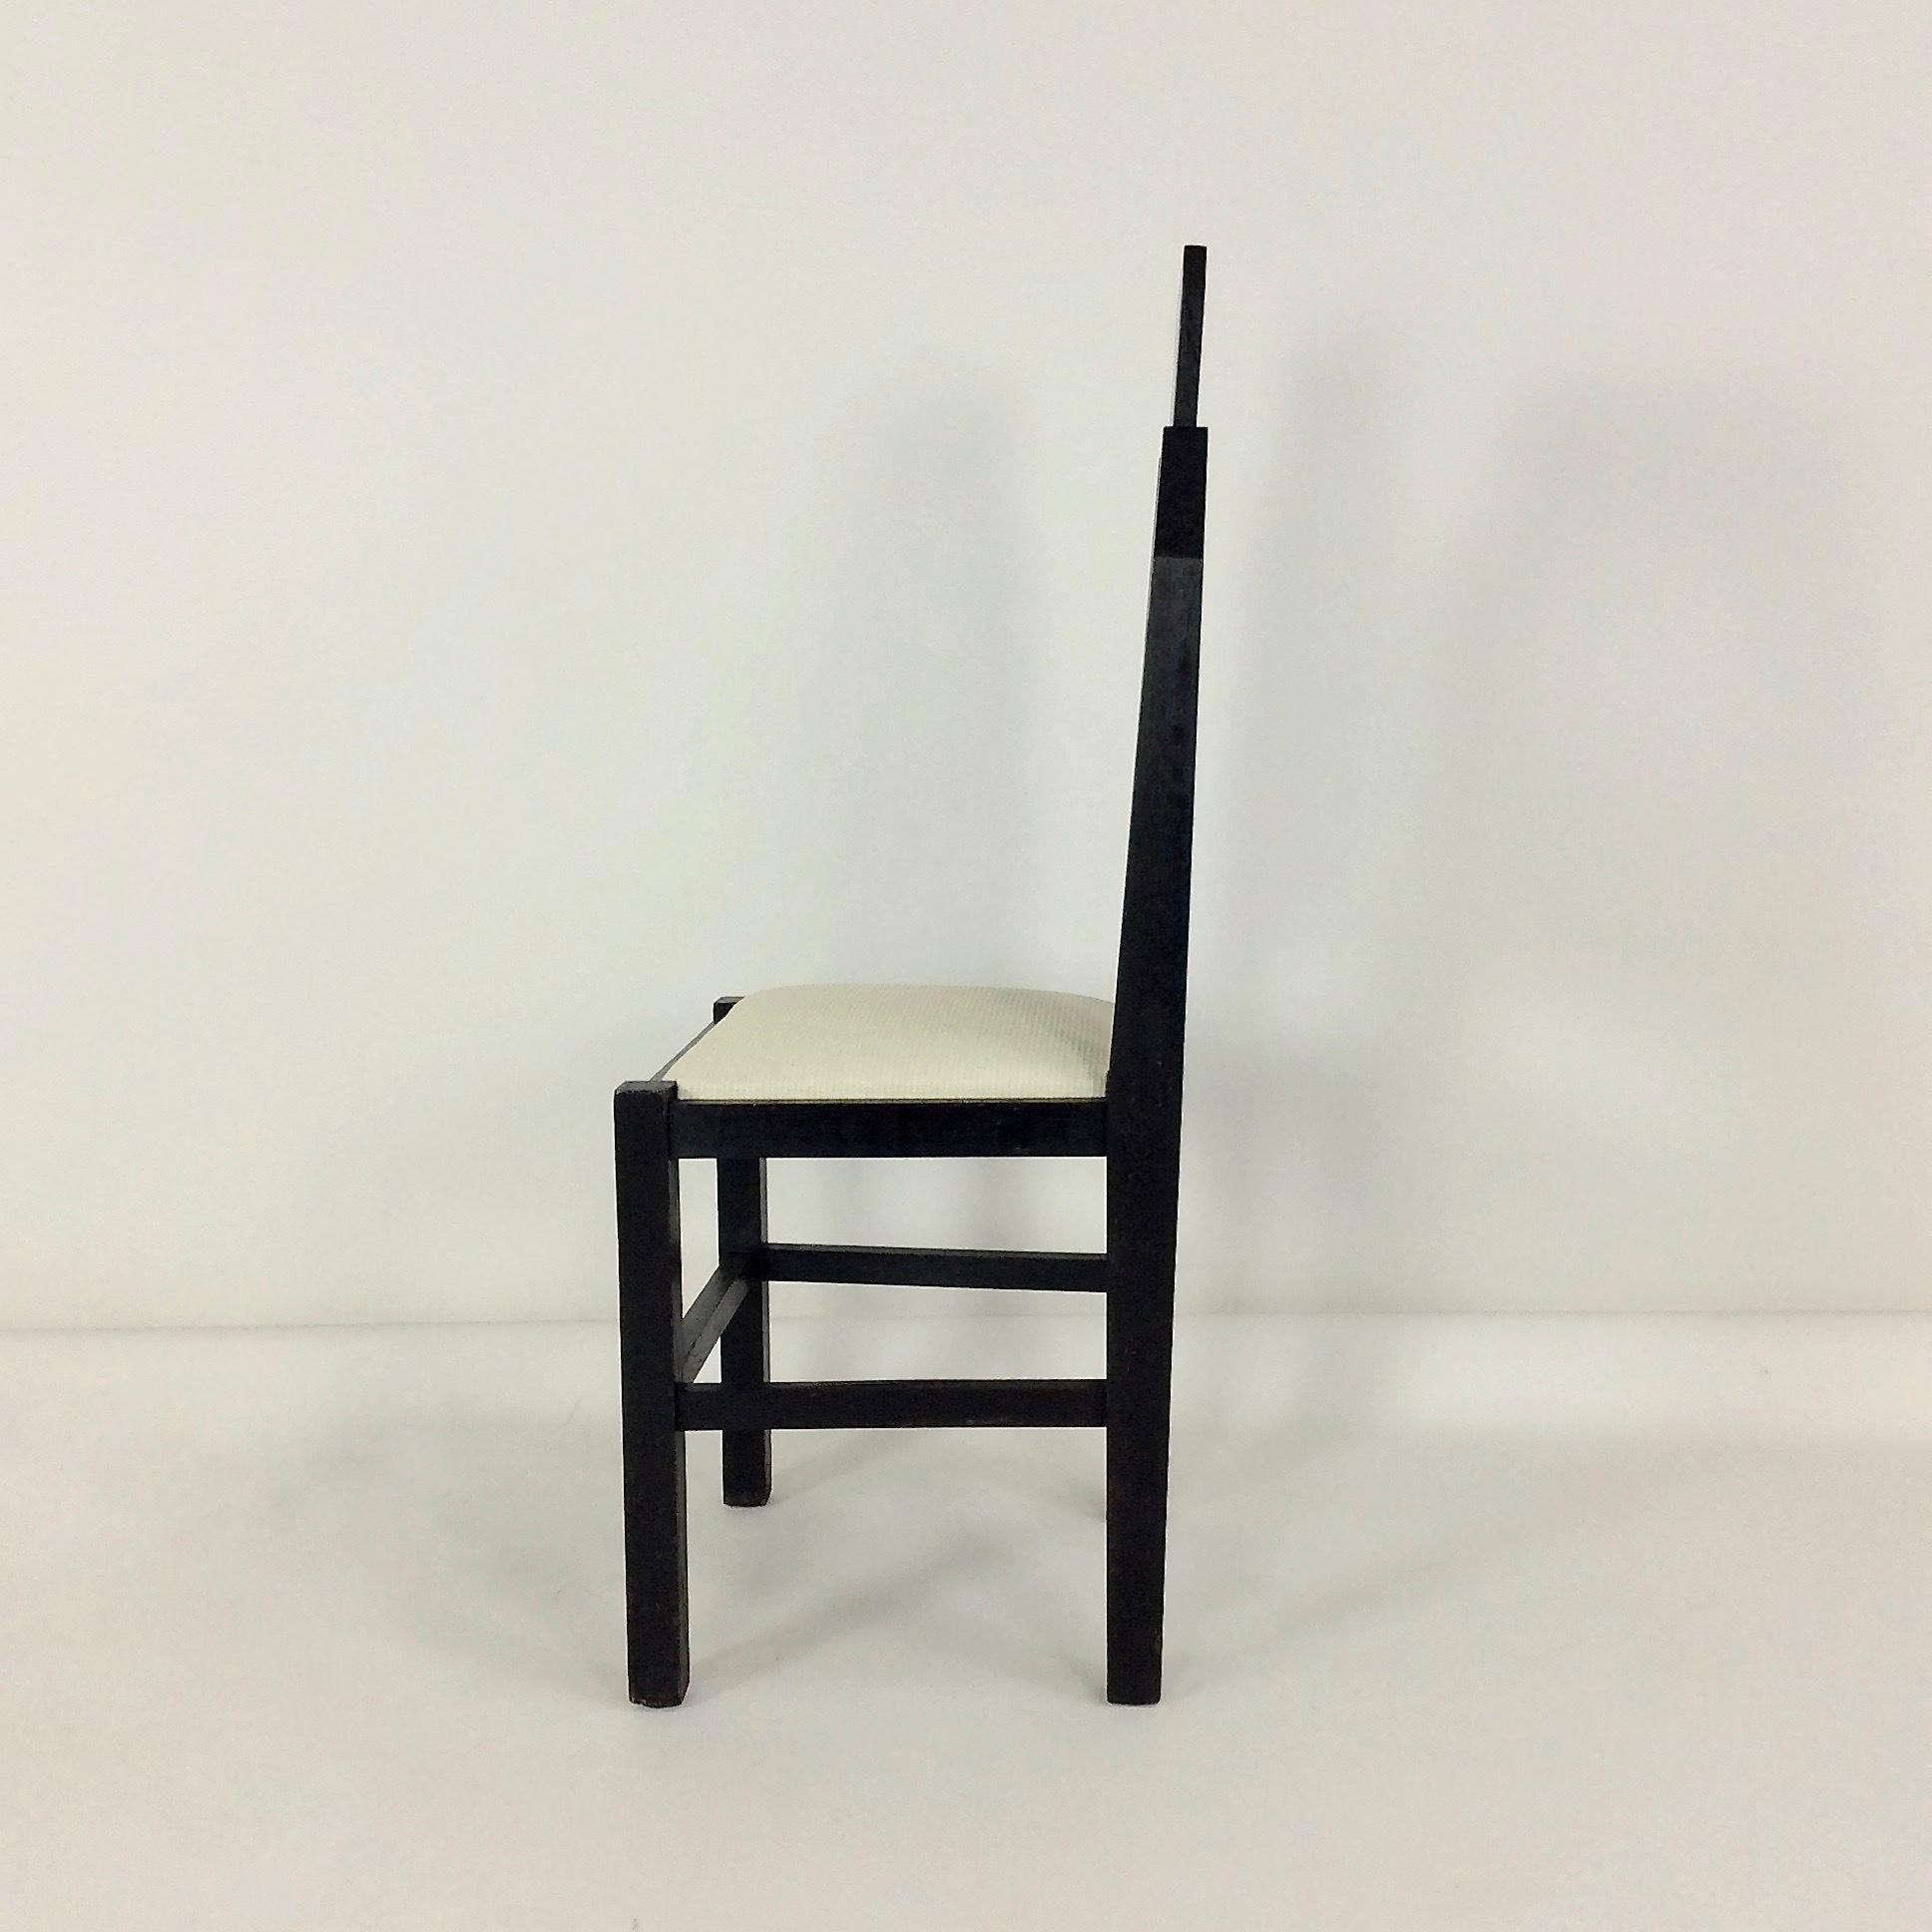 Blackened Marcel-Louis Baugniet Modernist Chair, circa 1925, Belgium For Sale